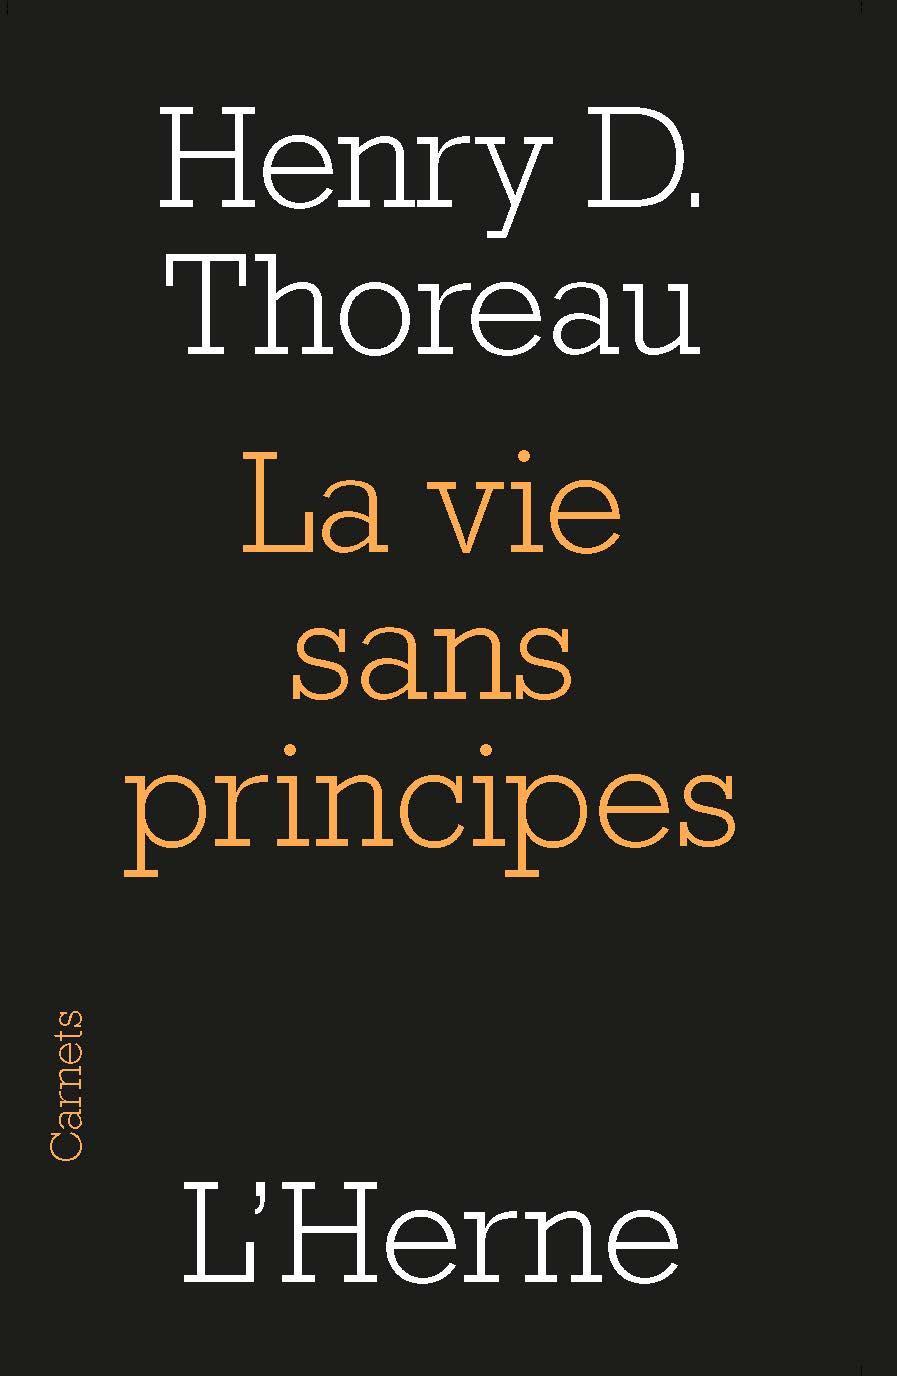 La vie sans principes (French language)